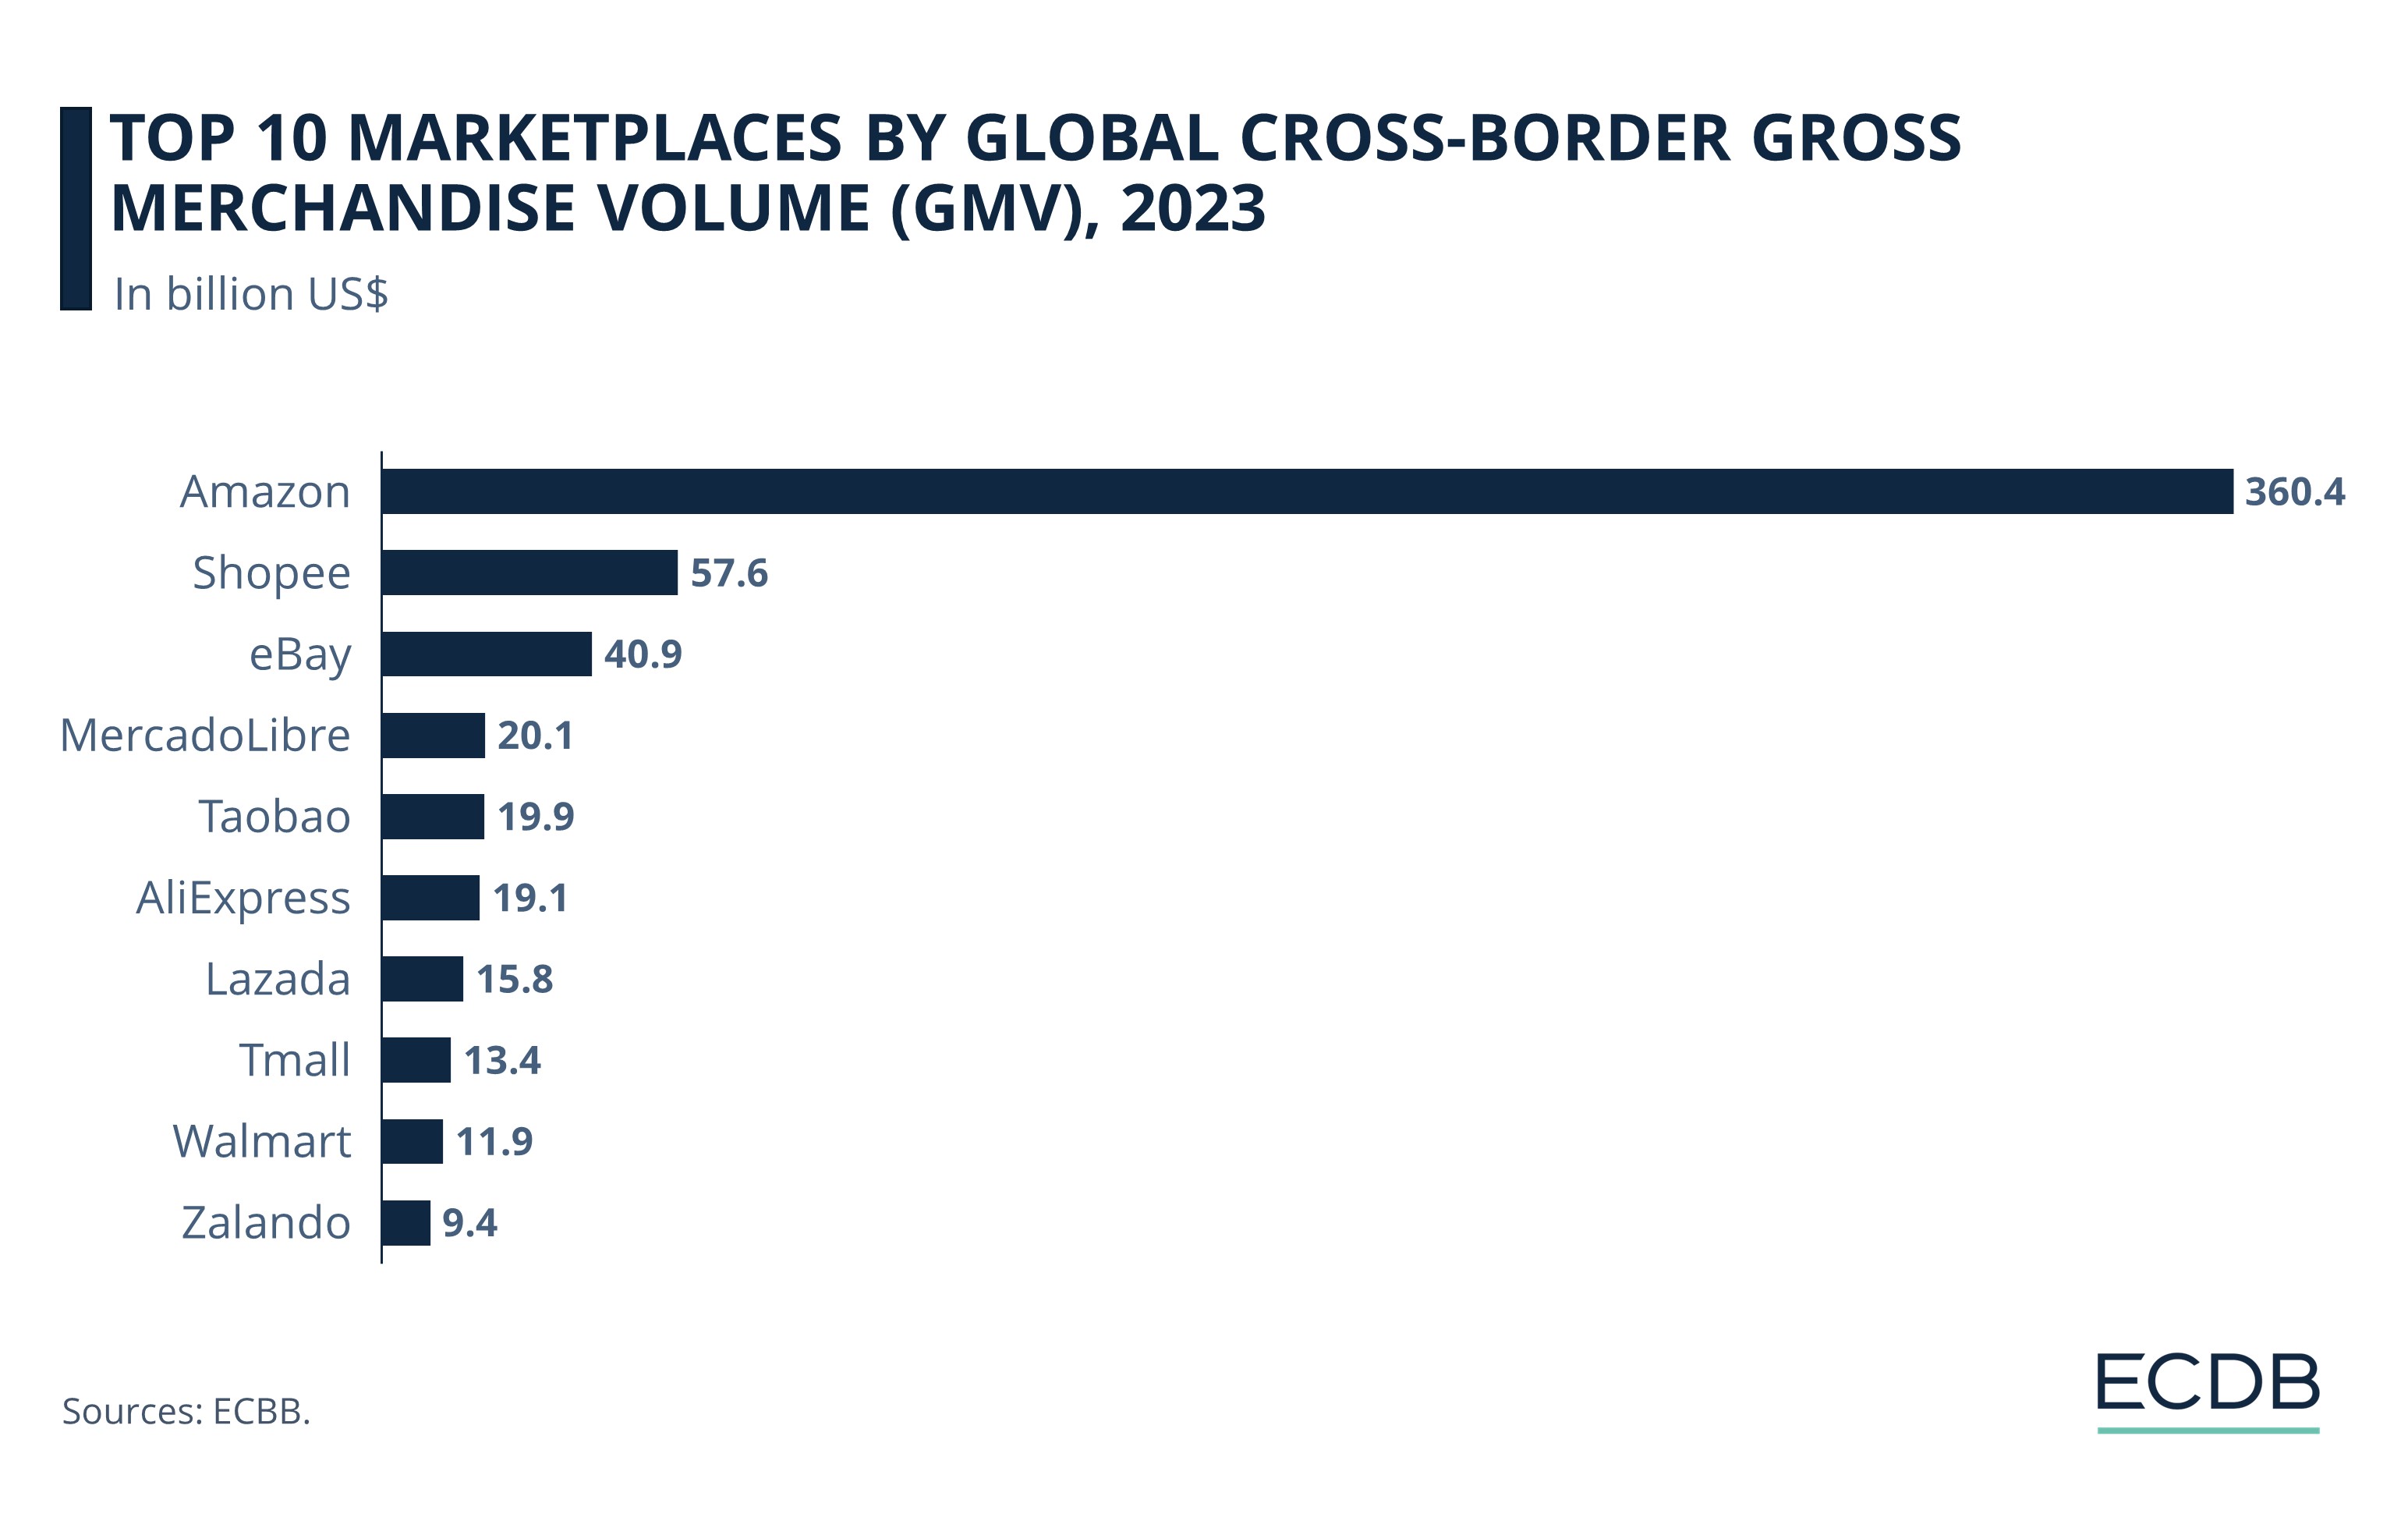 Top Marketplaces by Global Cross-Border Gross Merchandise Volume (GMV), 2023